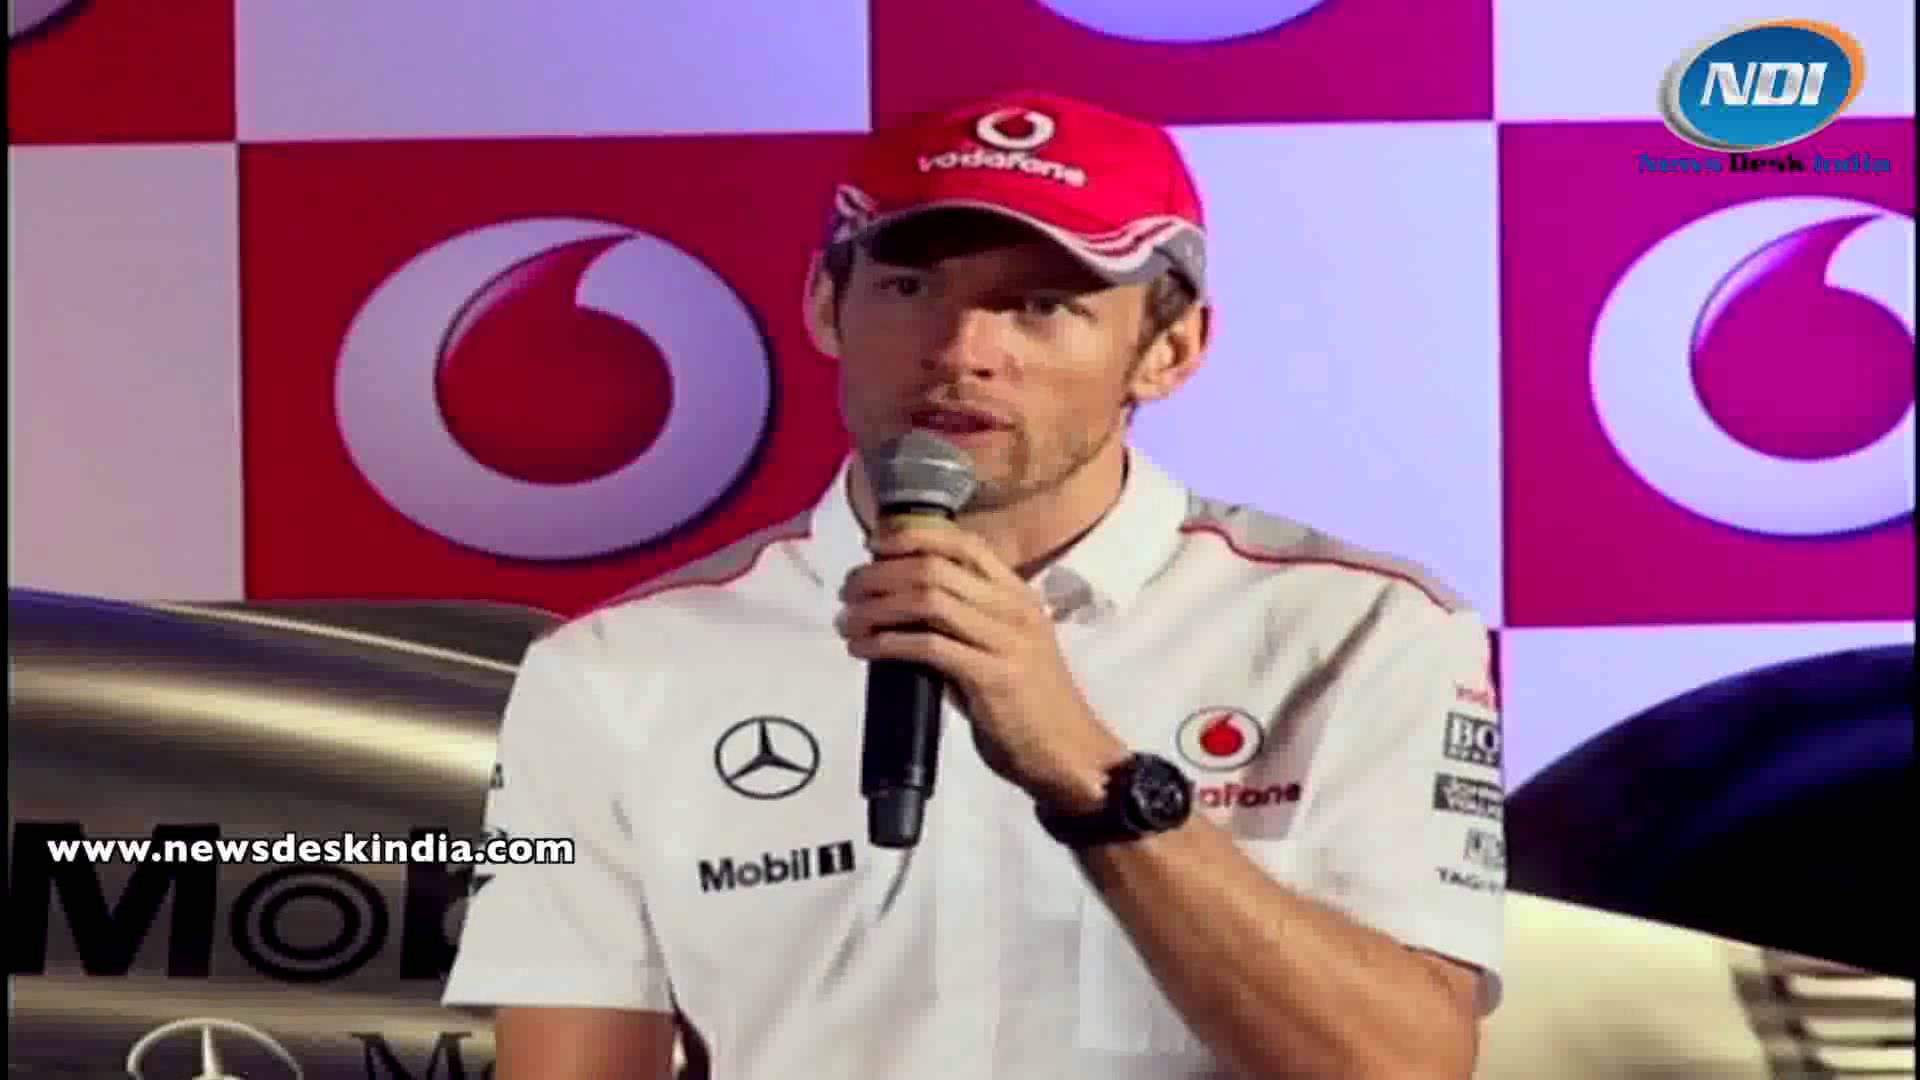 Jenson Button a racing icon plus 2009 Formula One World Champion